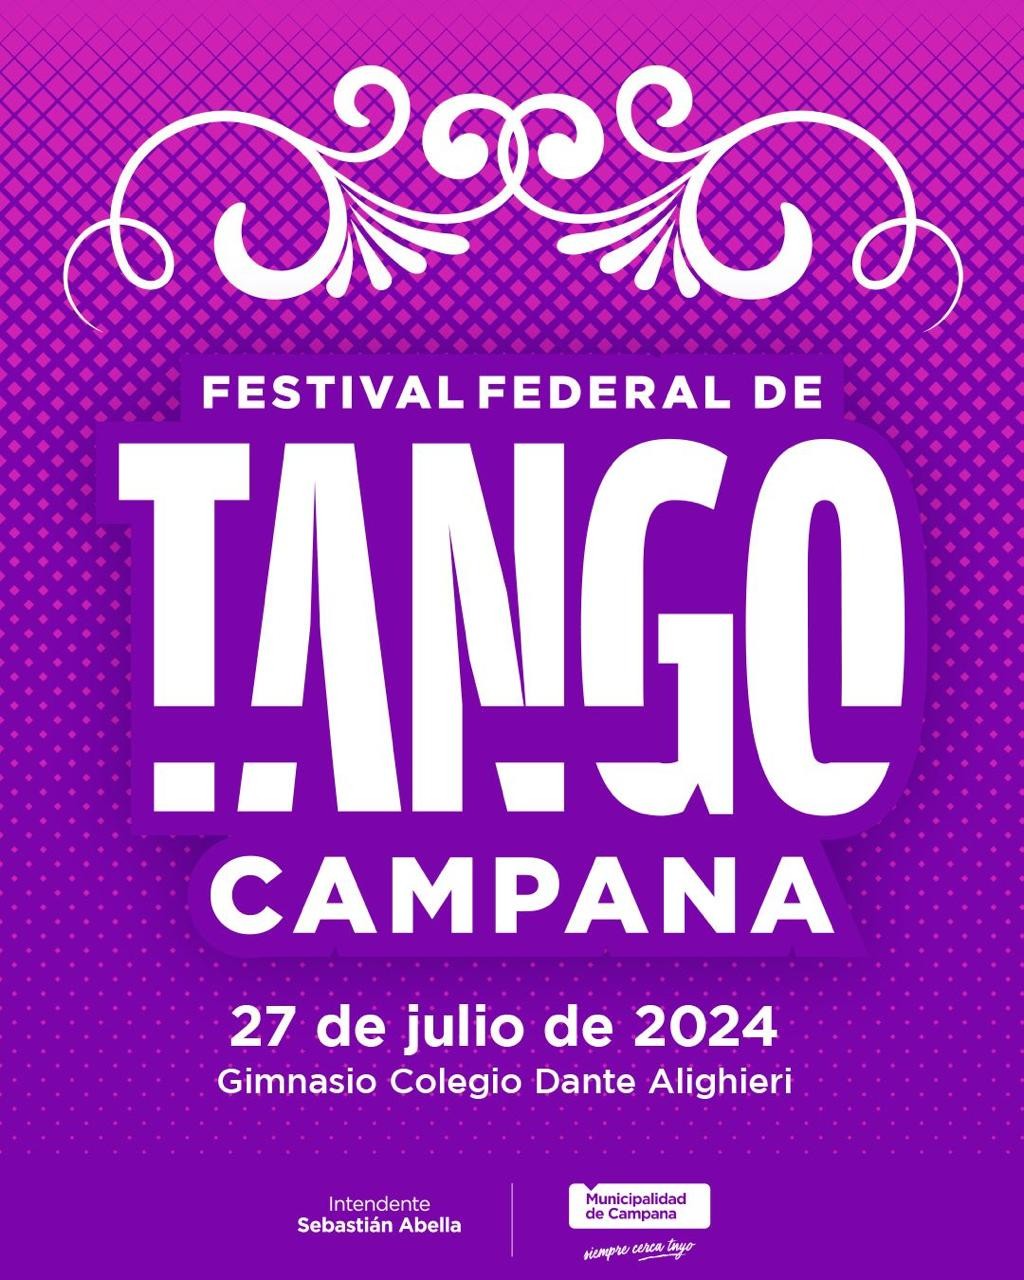 Campana tendrá su Festival Federal de Tango